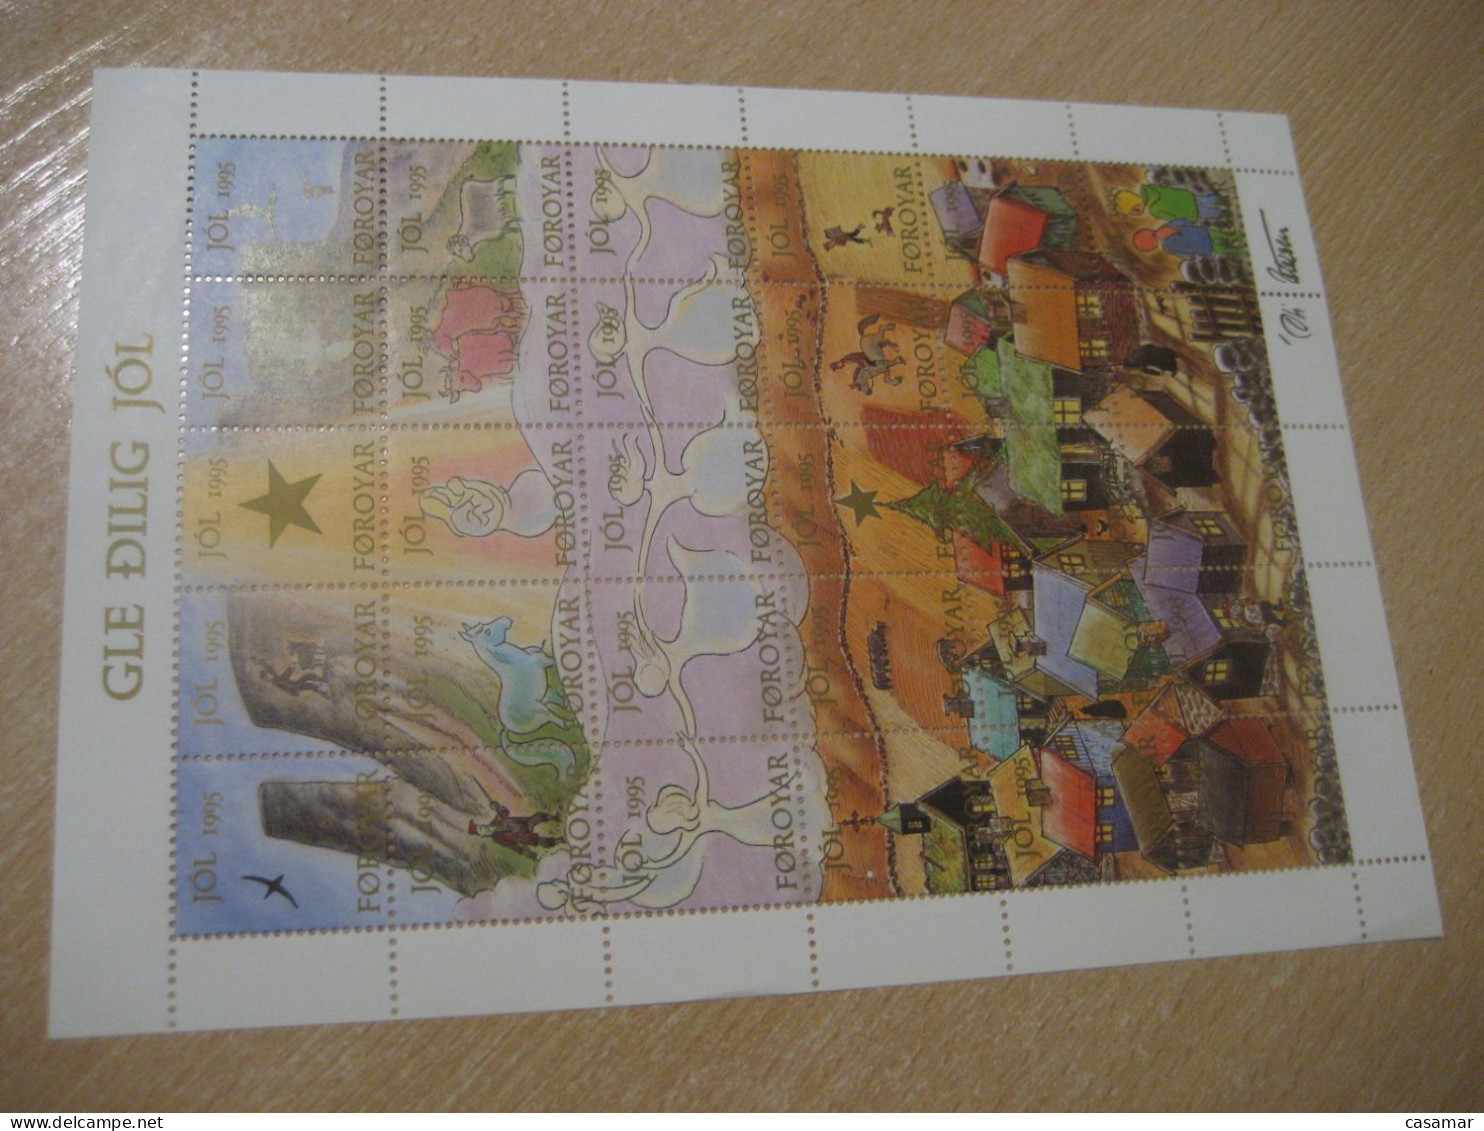 FAROE ISLANDS 1995 Horse Cow Sheep Merry Christmas Sheet Bloc 30 Poster Stamp Vignette DENMARK Label - Féroé (Iles)